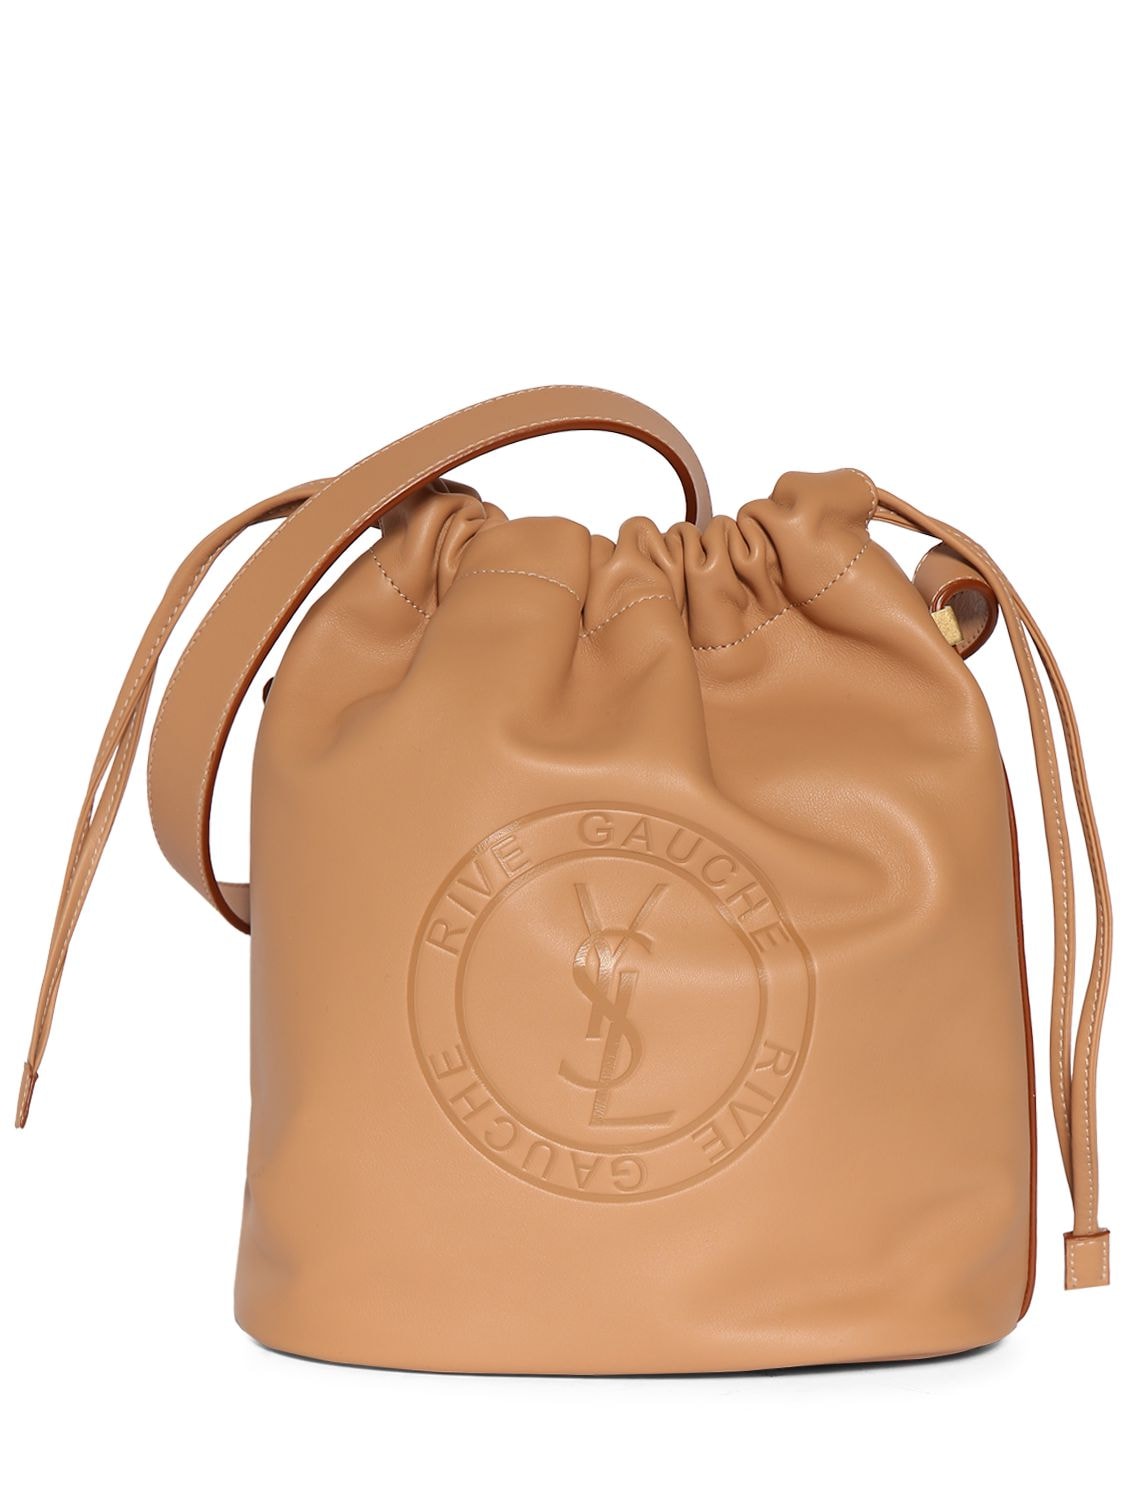 Saint Laurent Rive Gauche Laced Leather Bucket Bag In Vintage Brown